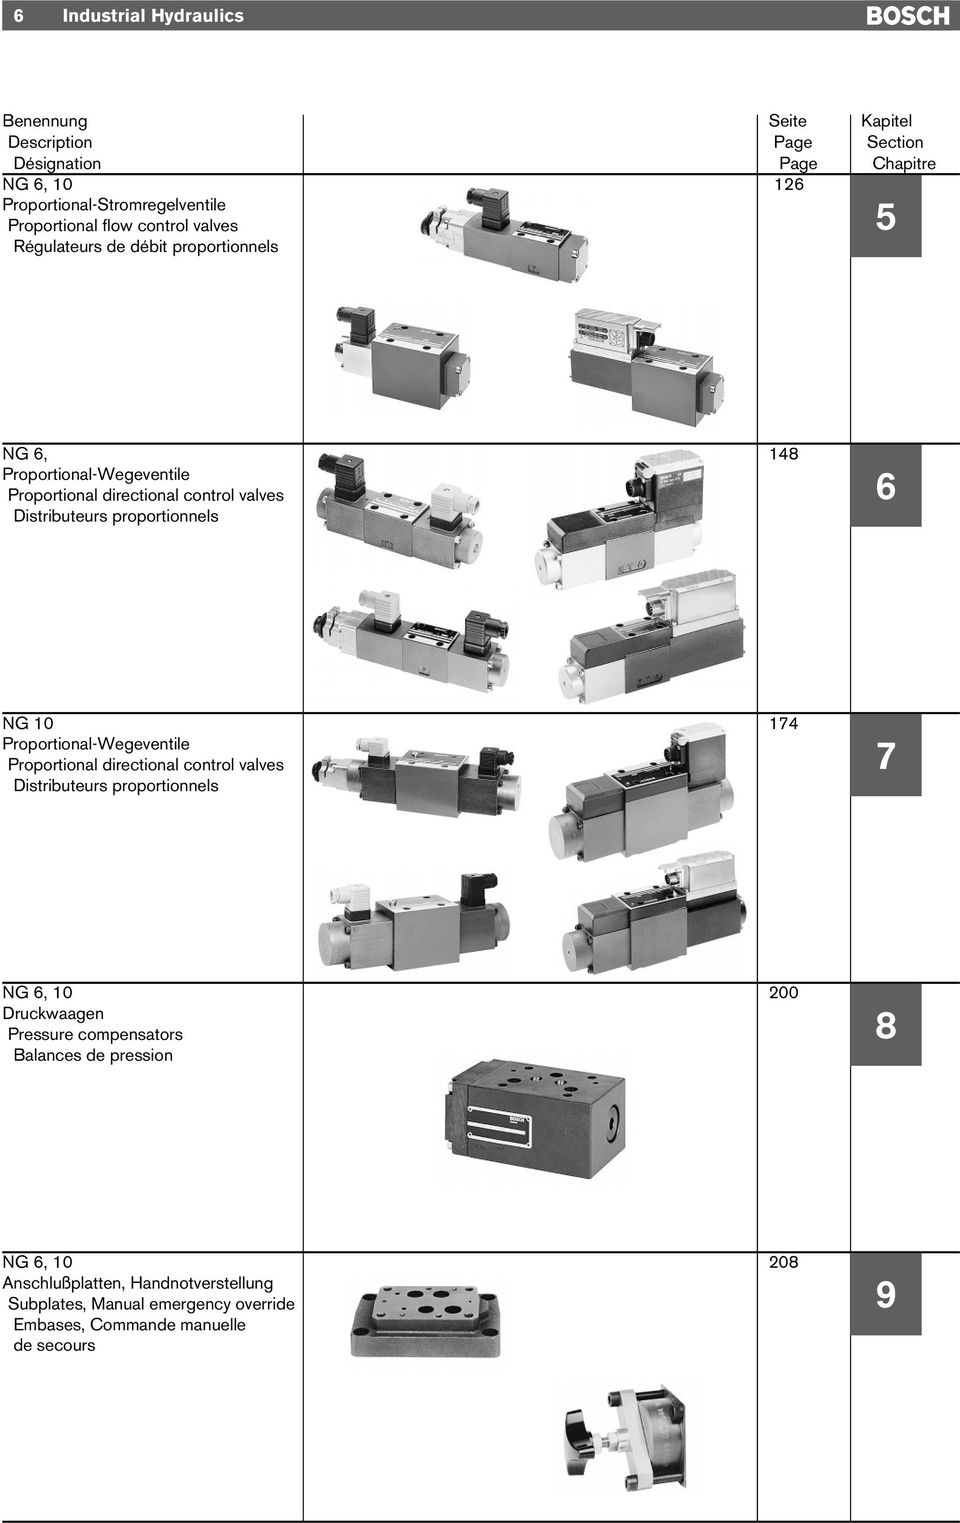 Proportional-Wegeventile Proportional directional control valves Distributeurs proportionnels 7 NG 6, 10 200 Druckwaagen Pressure